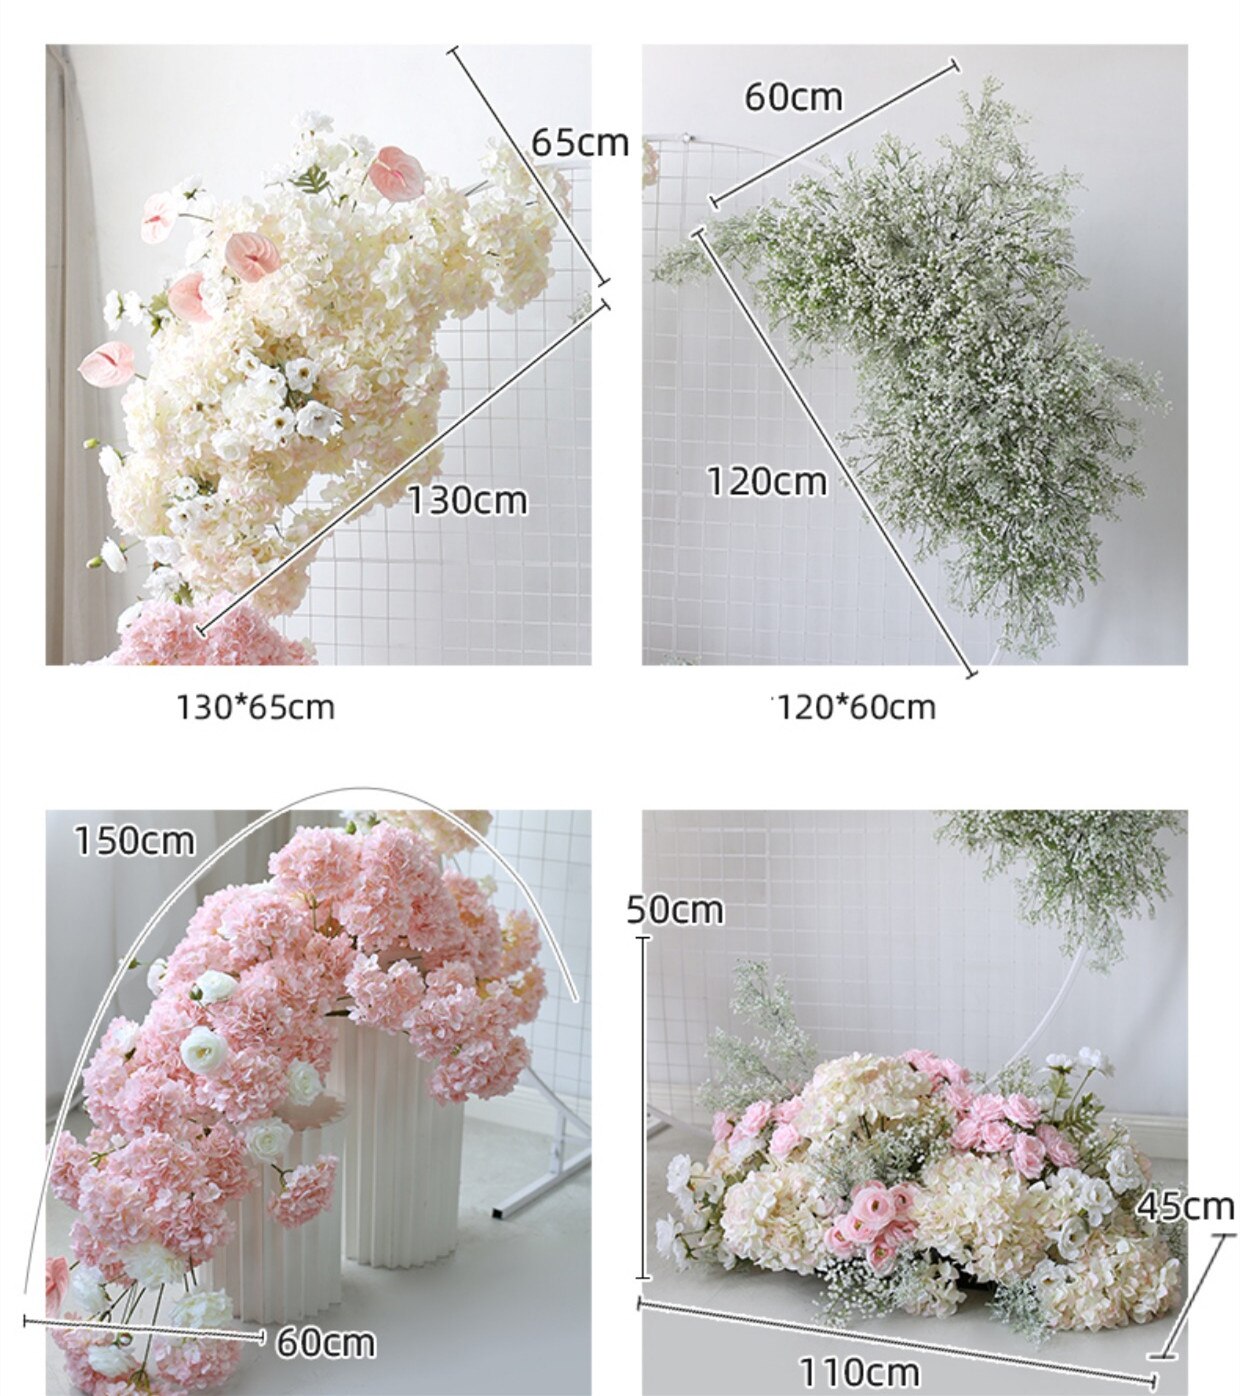 burgady flower arrangements1